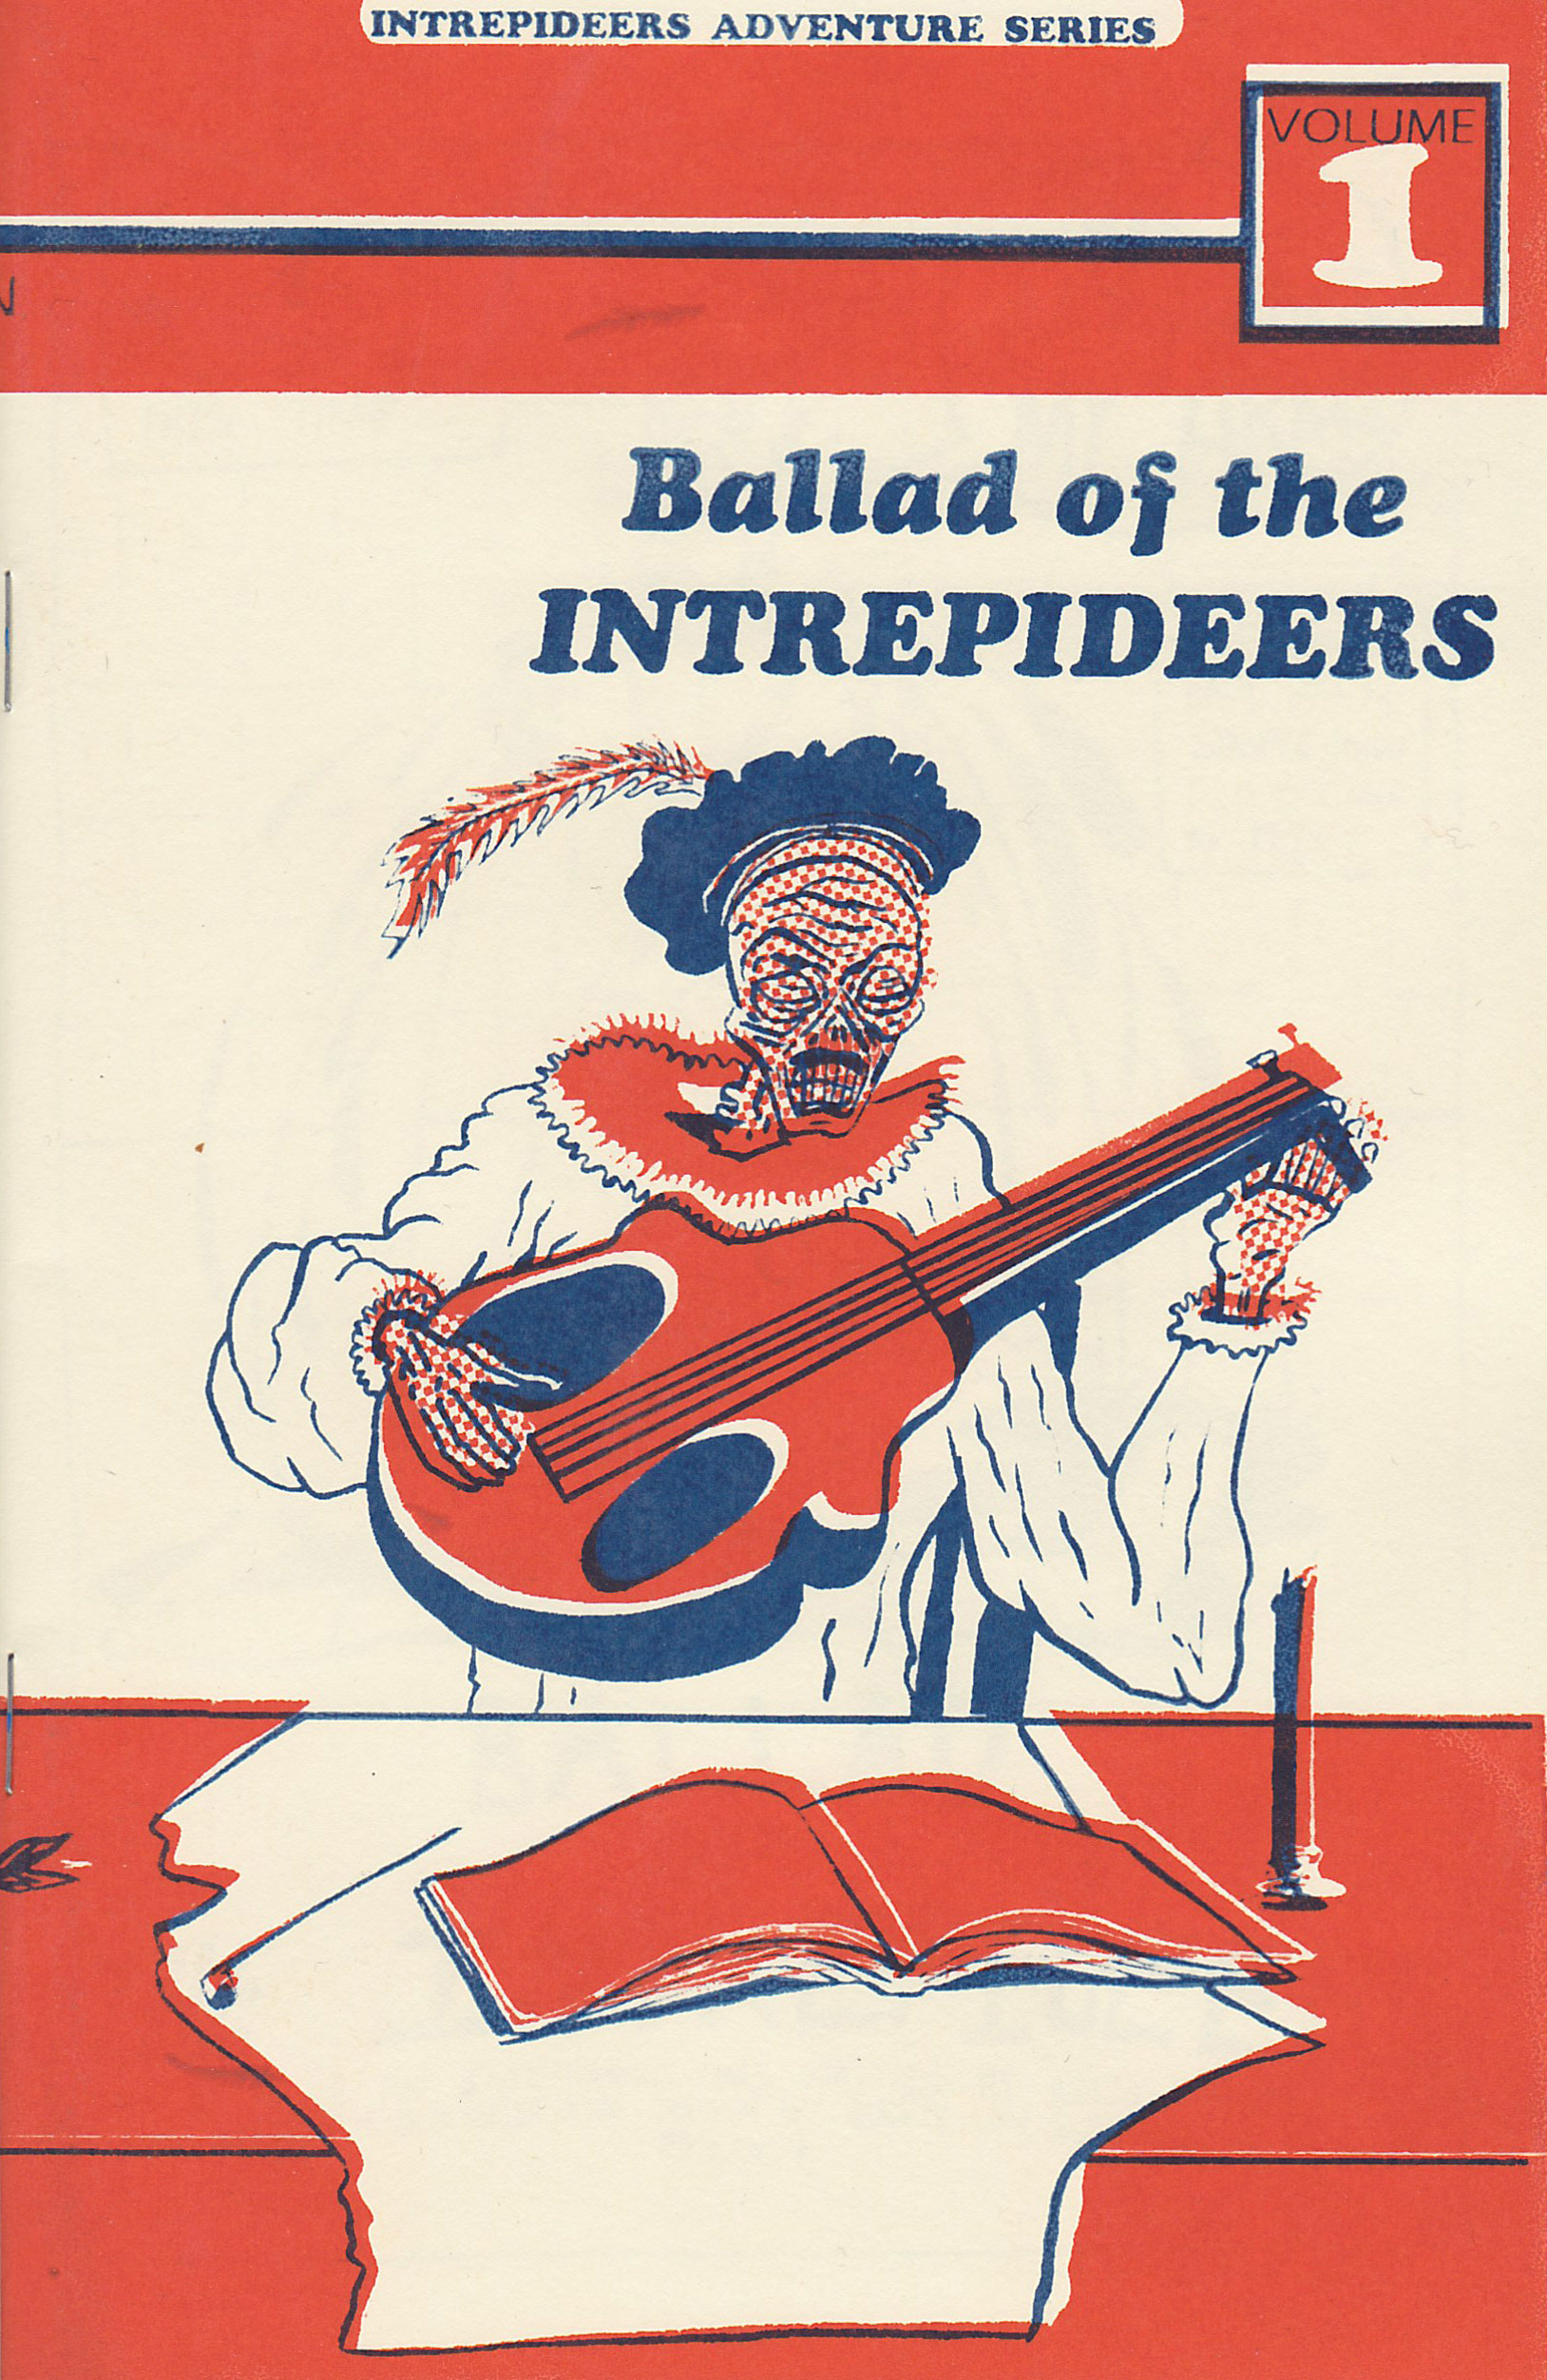 Ballad of the Intrepideers